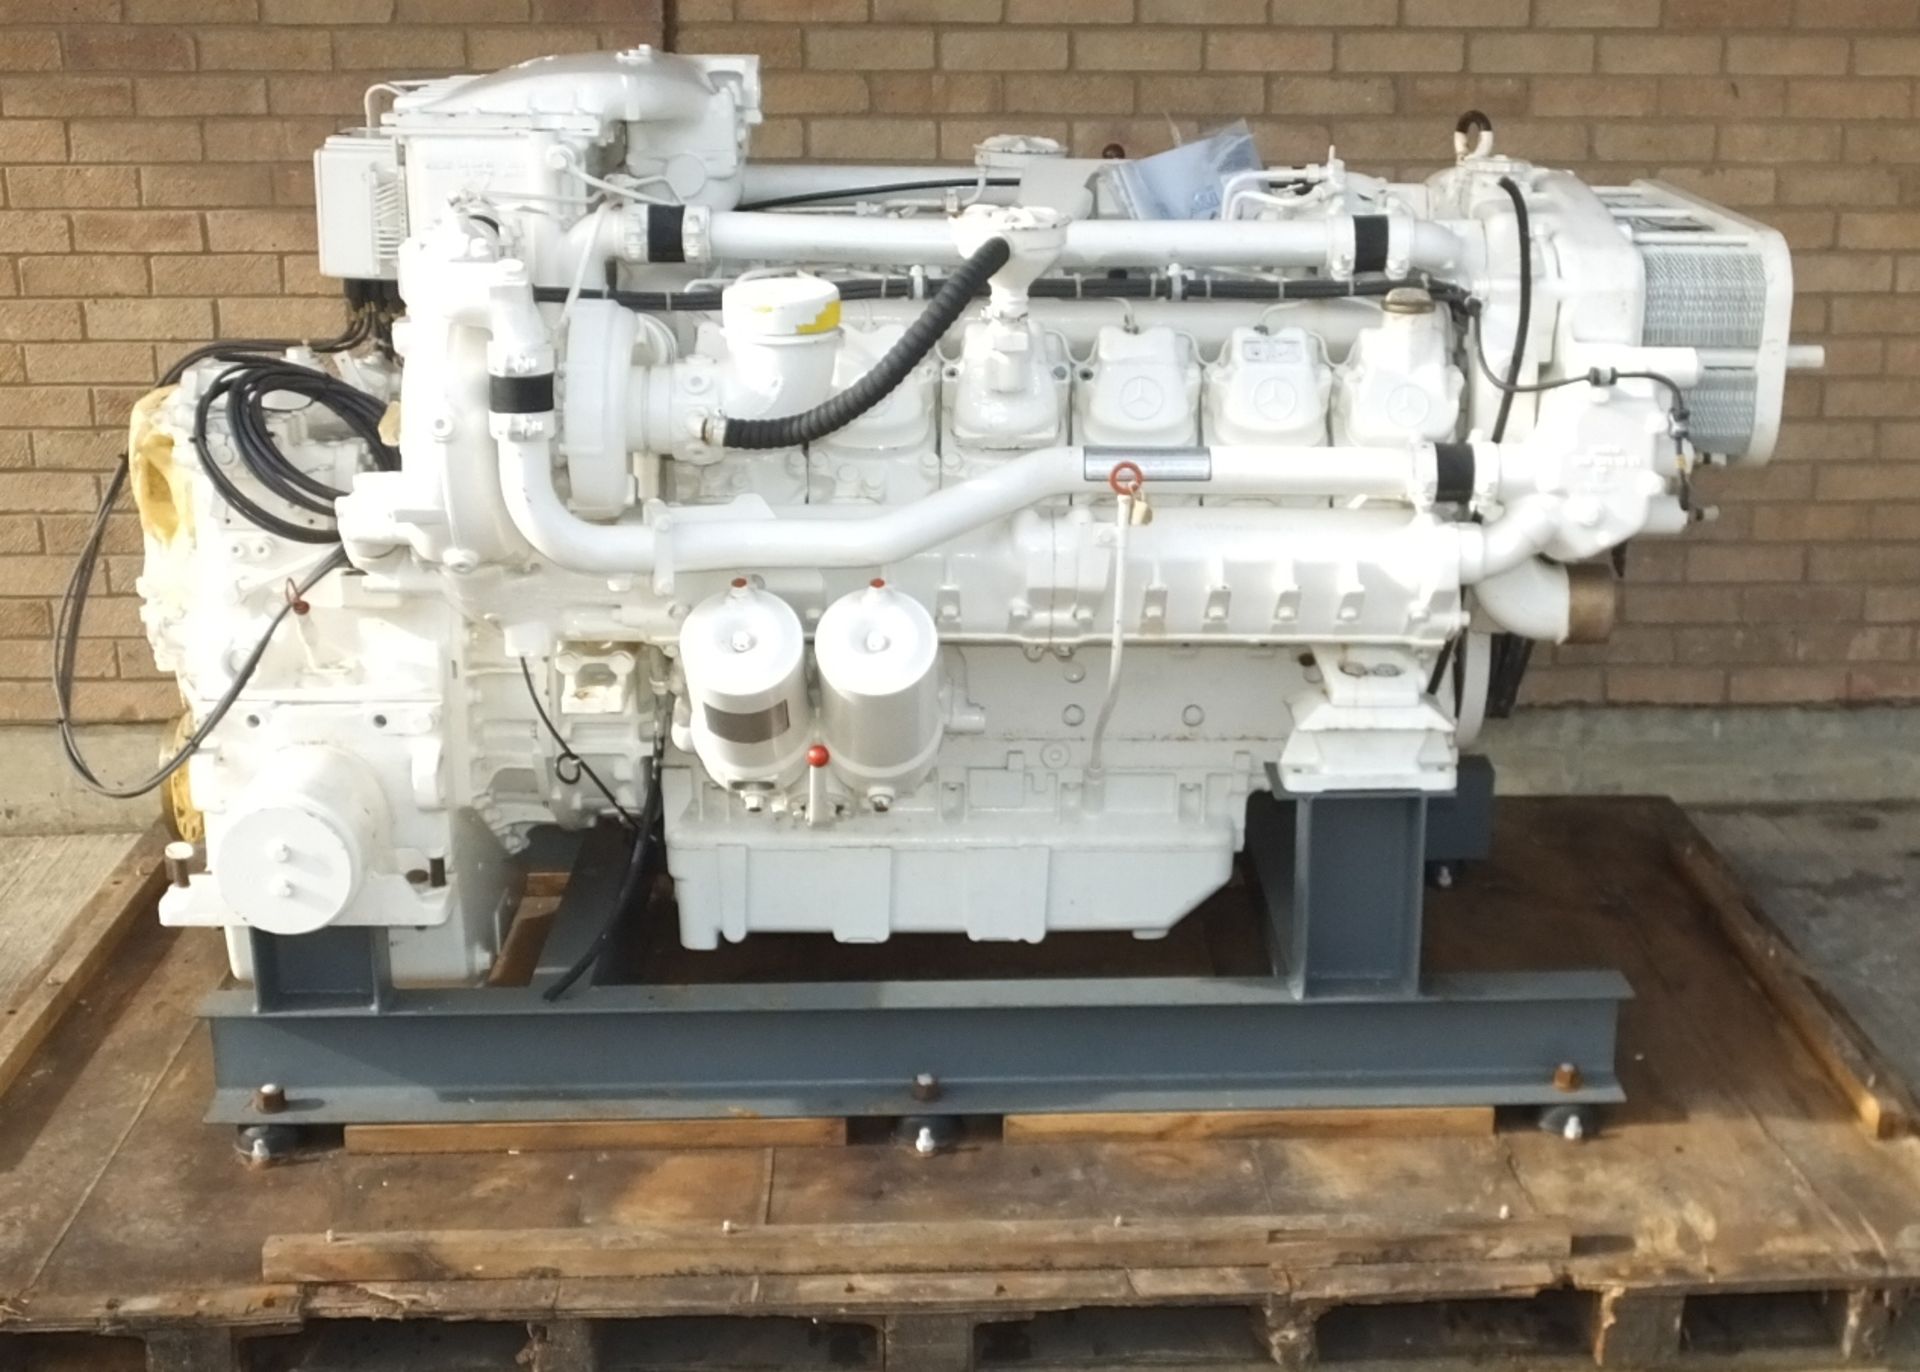 MTU 12V 183 engine - engine code OM 444 LA - 610kW - 1310HP - 2100 RPM - Gearbox ZF Marine